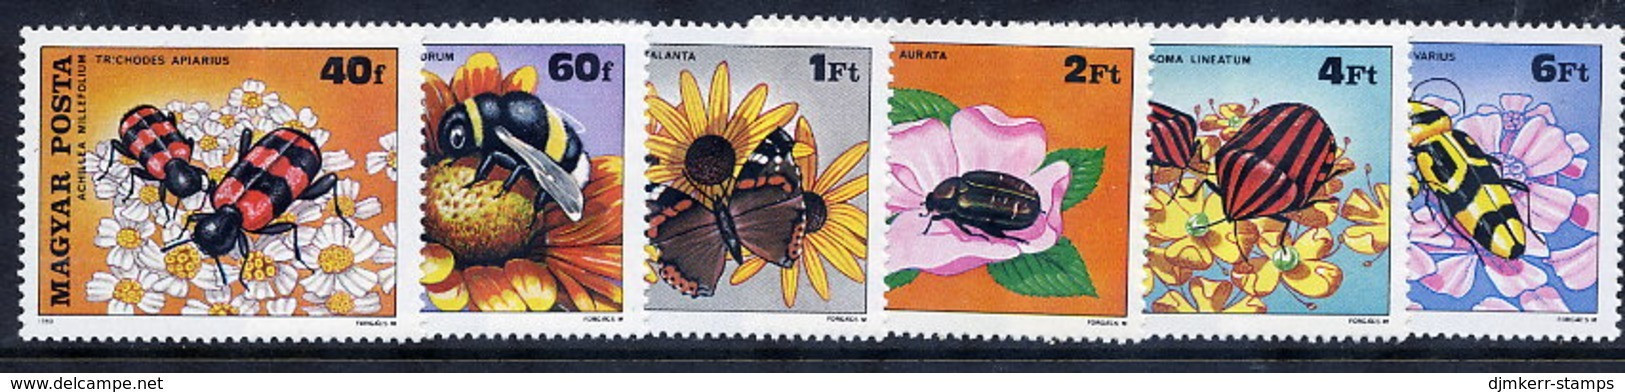 HUNGARY 1980 Pollination Of Plants  MNH /**.  Michel 3405-10 - Ungebraucht